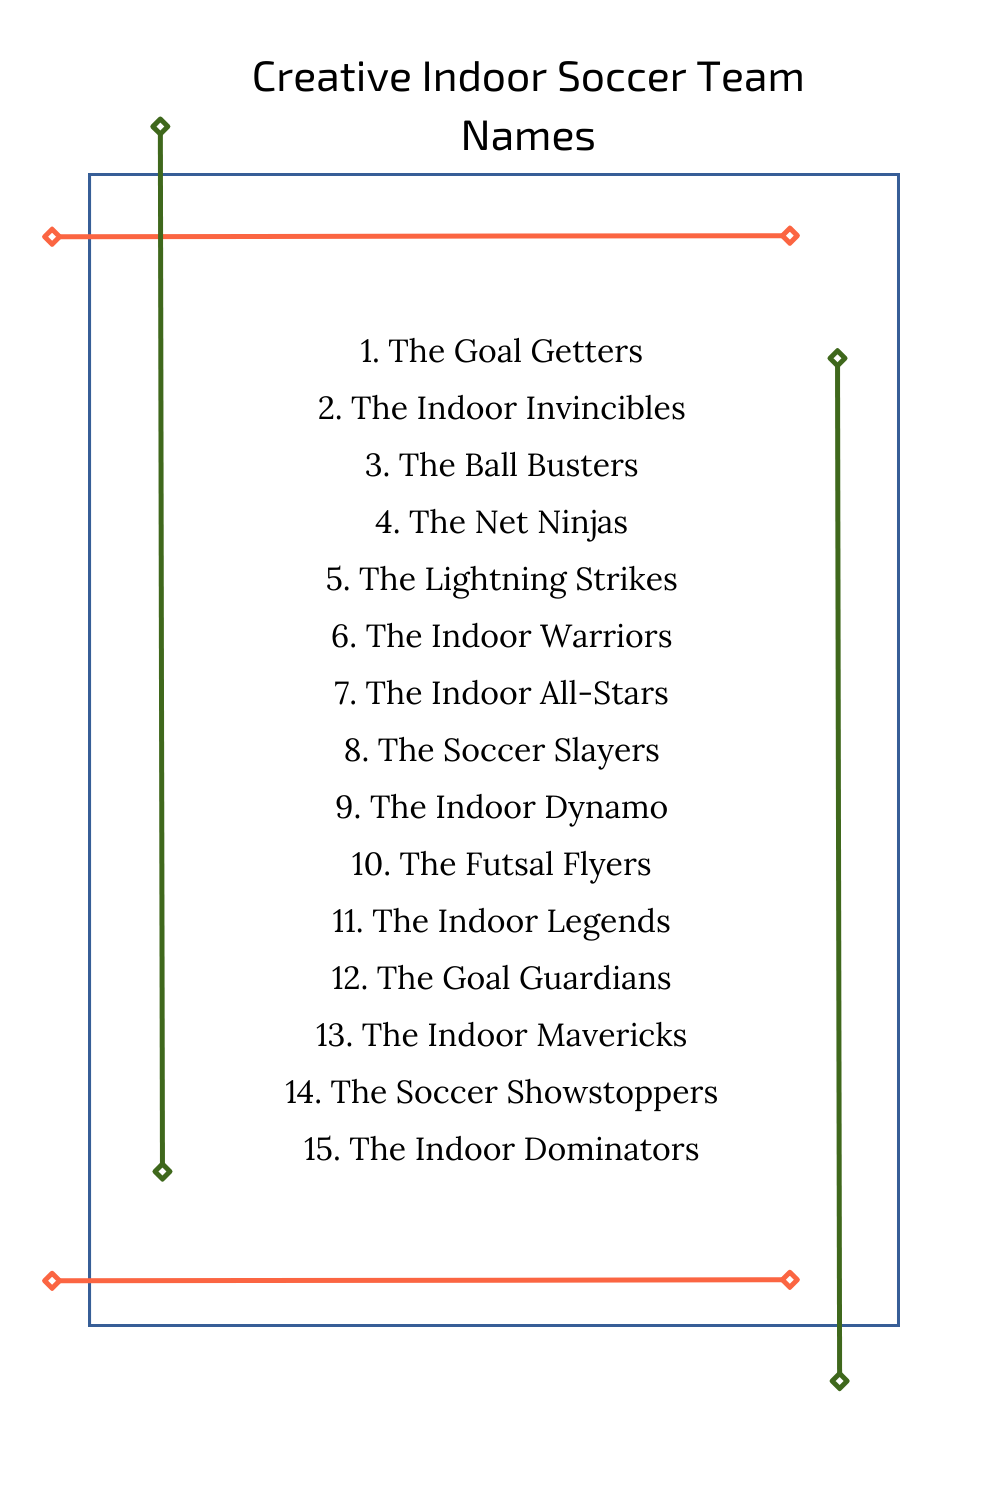 Creative Indoor Soccer Team Names